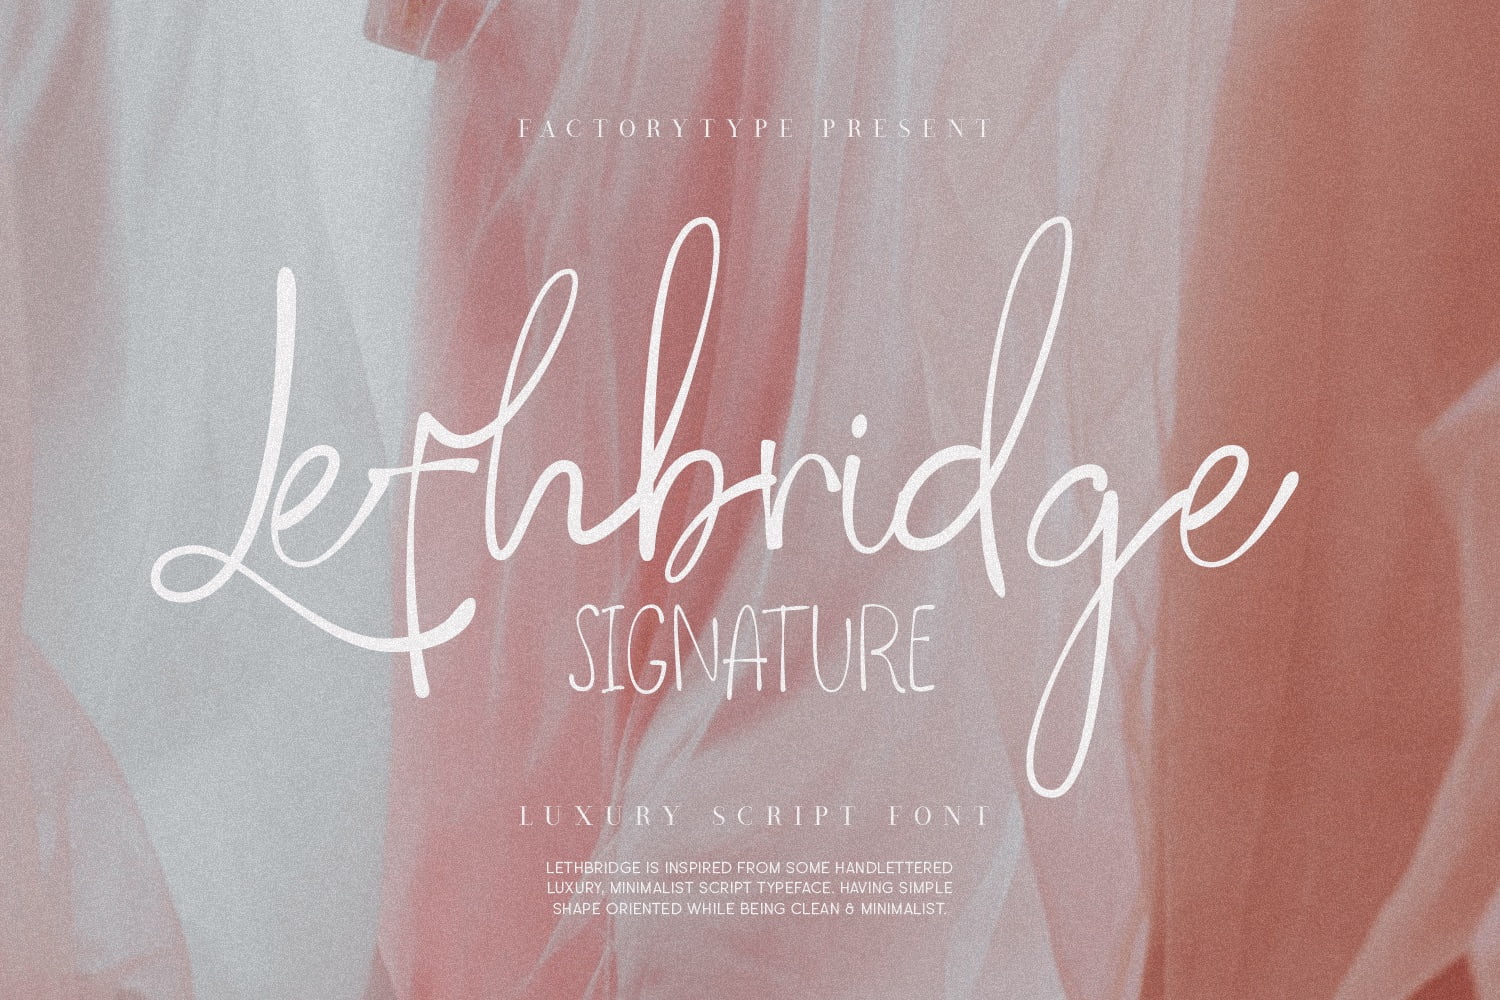 Lethbridge Handwriting